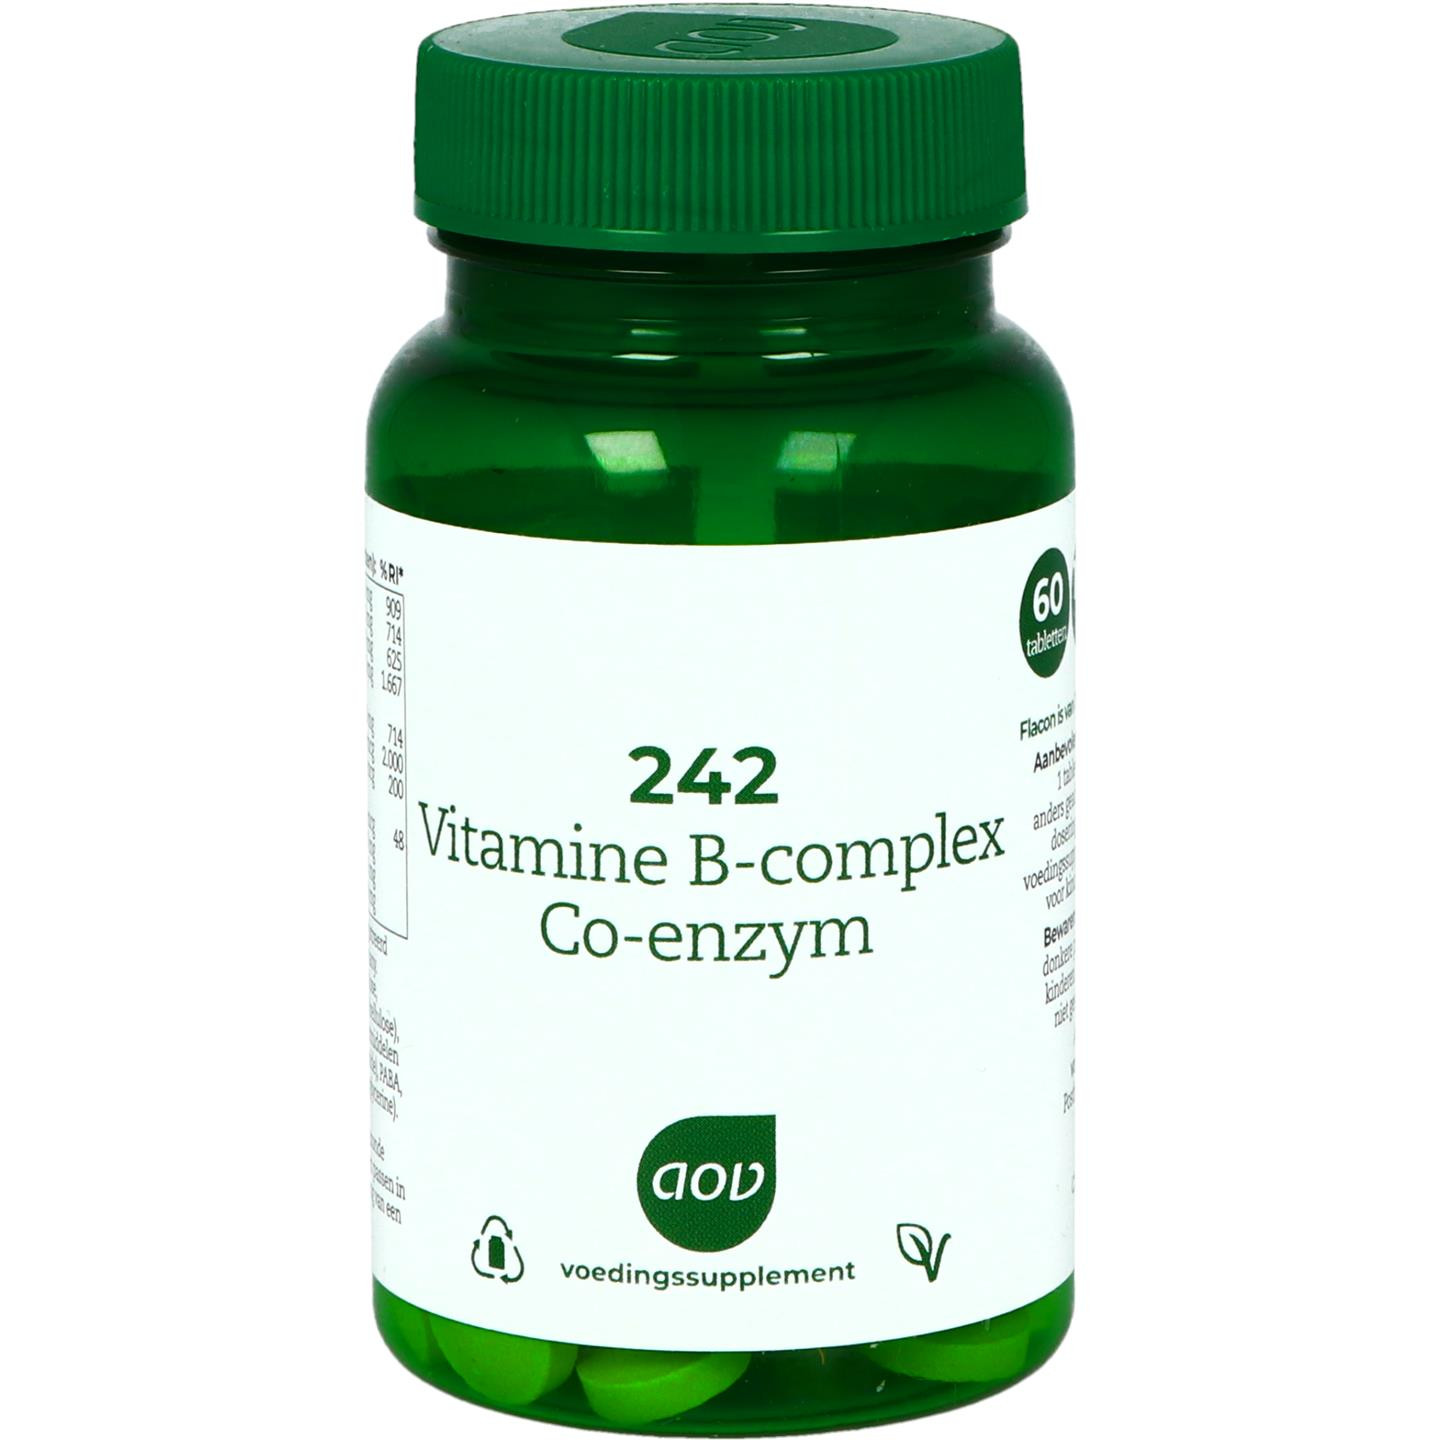 242 Vitamine B complex Co-enzym